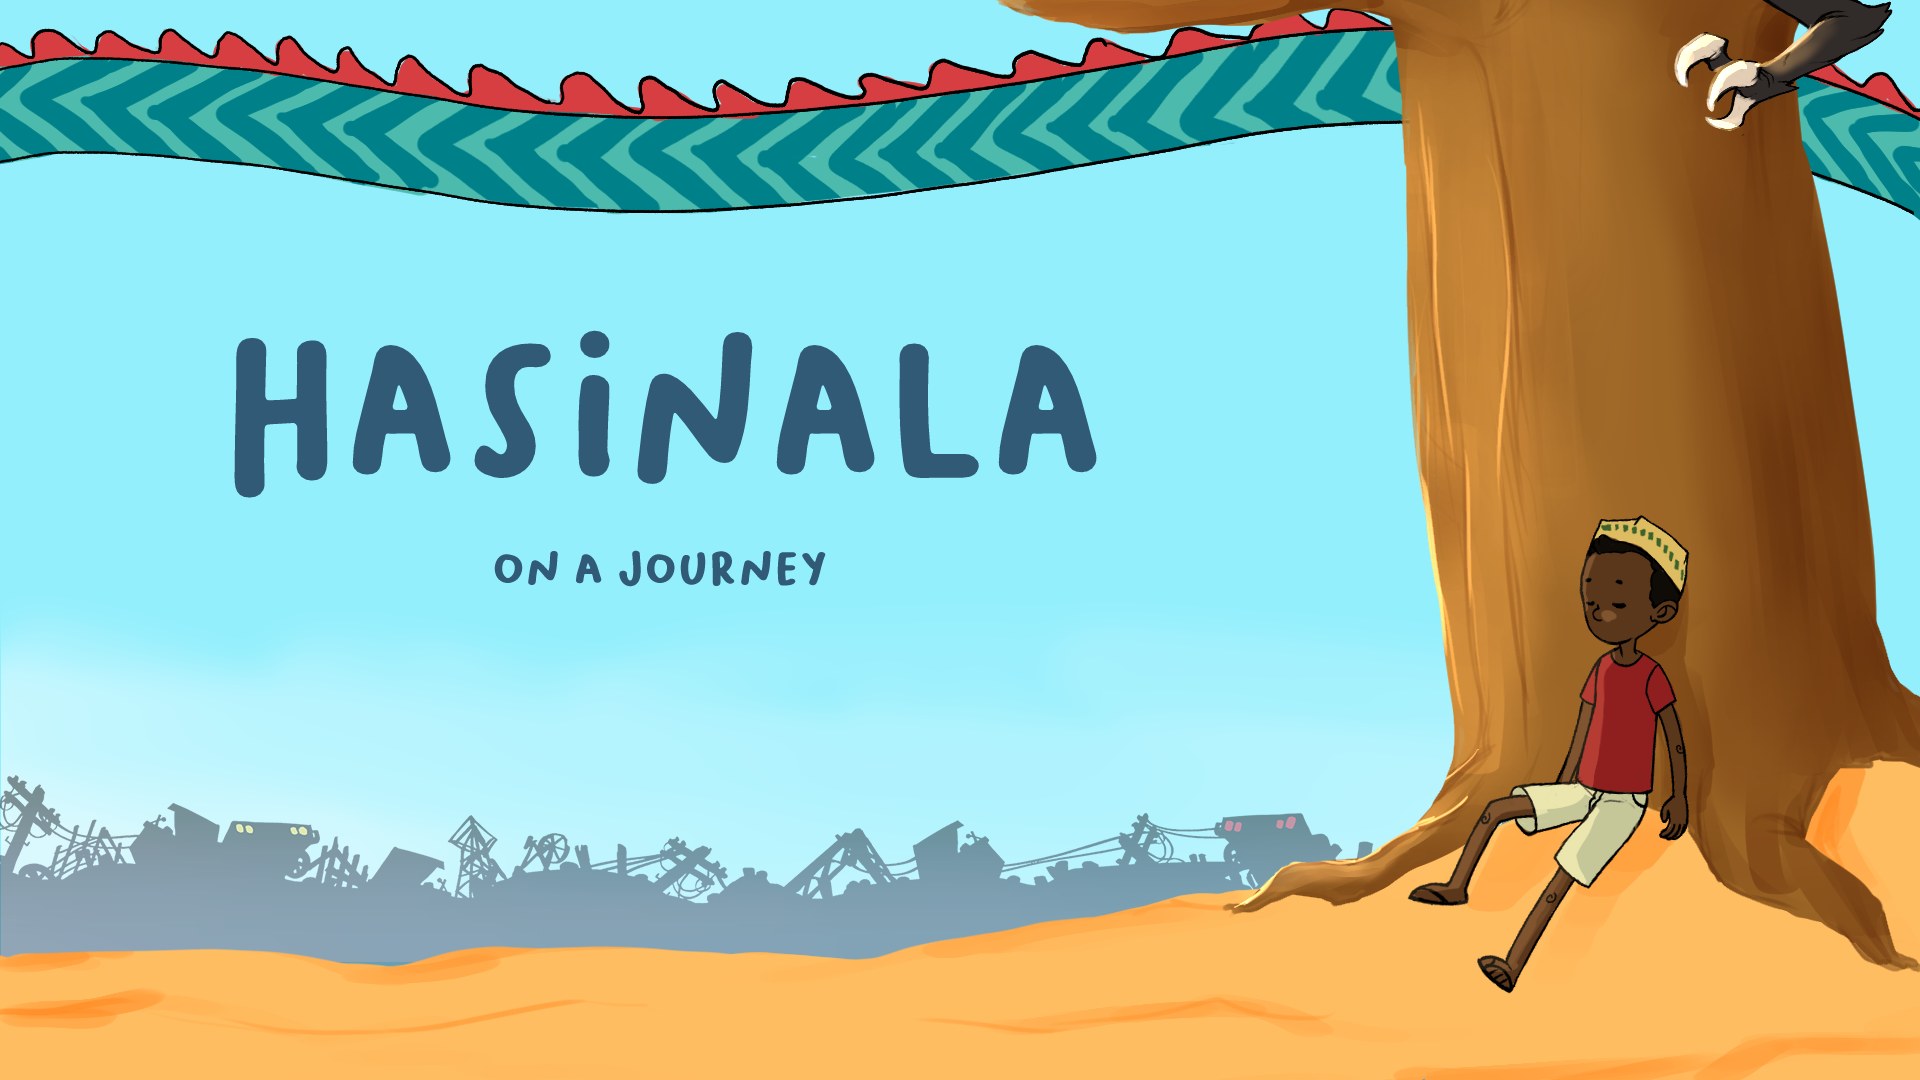 Hasinala, on a journey